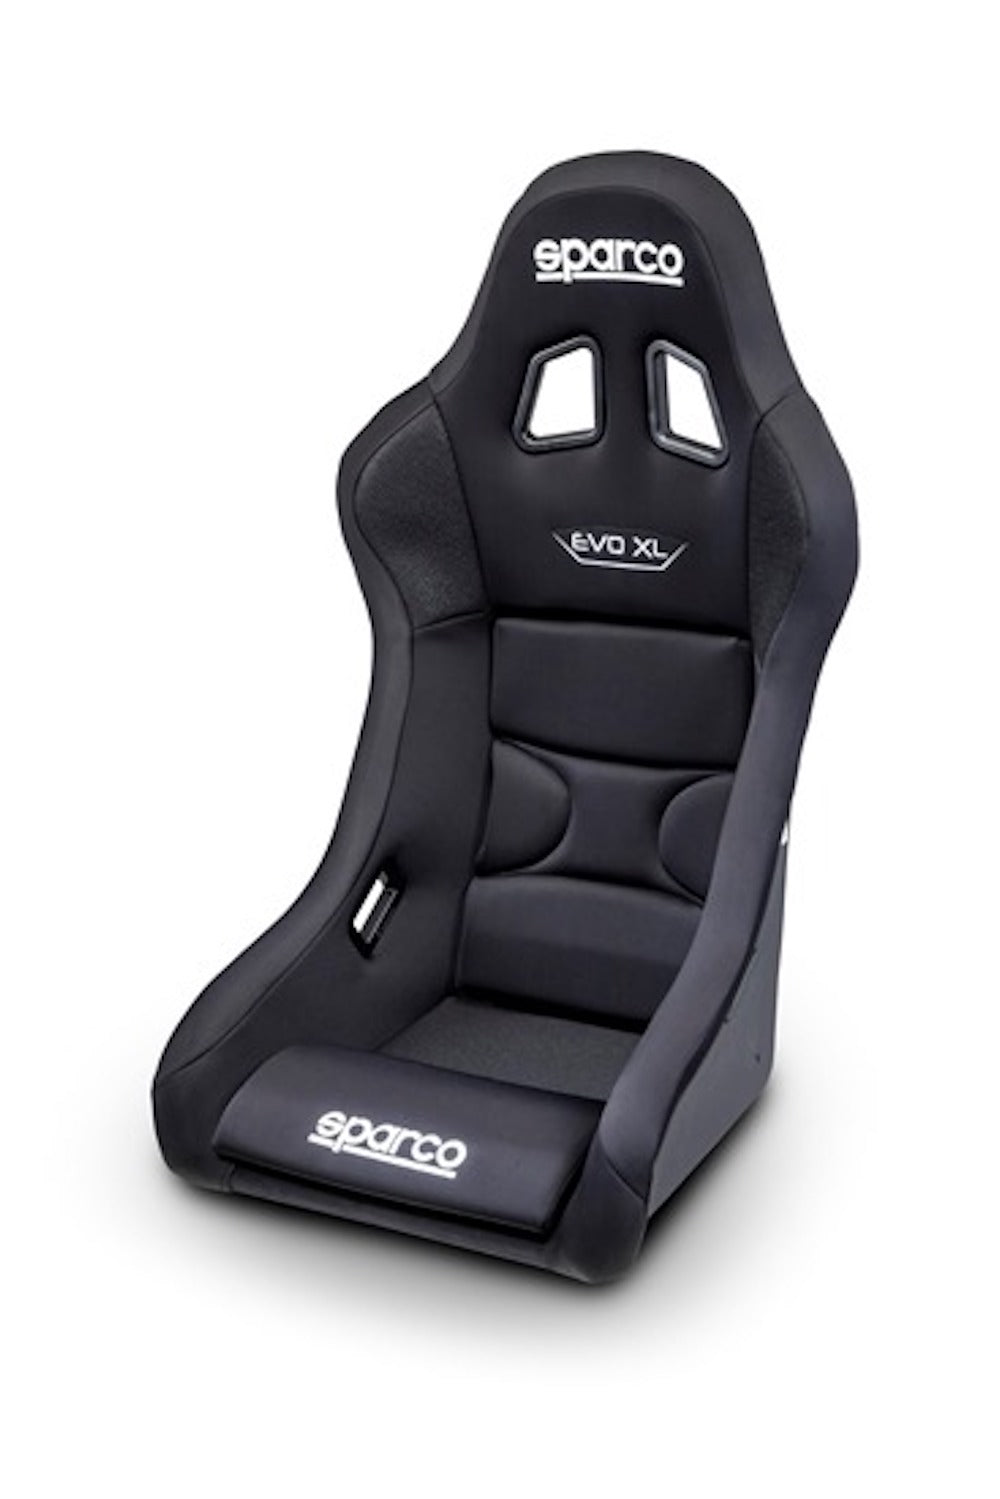 Sparco EVO XL QRT-X Racing Seats